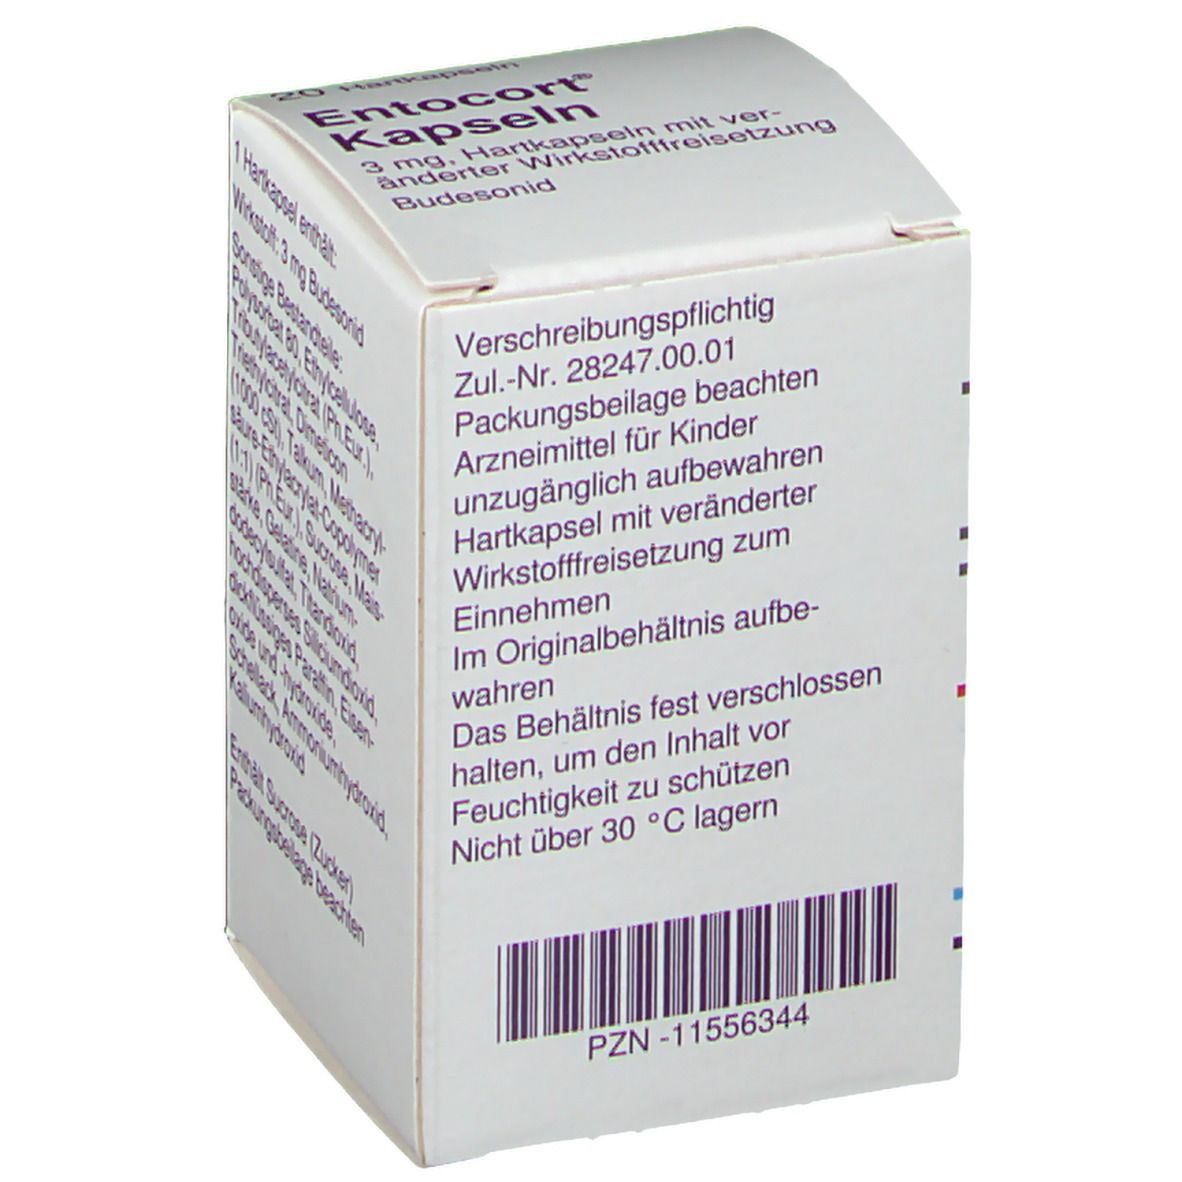 Entocort® 3 mg